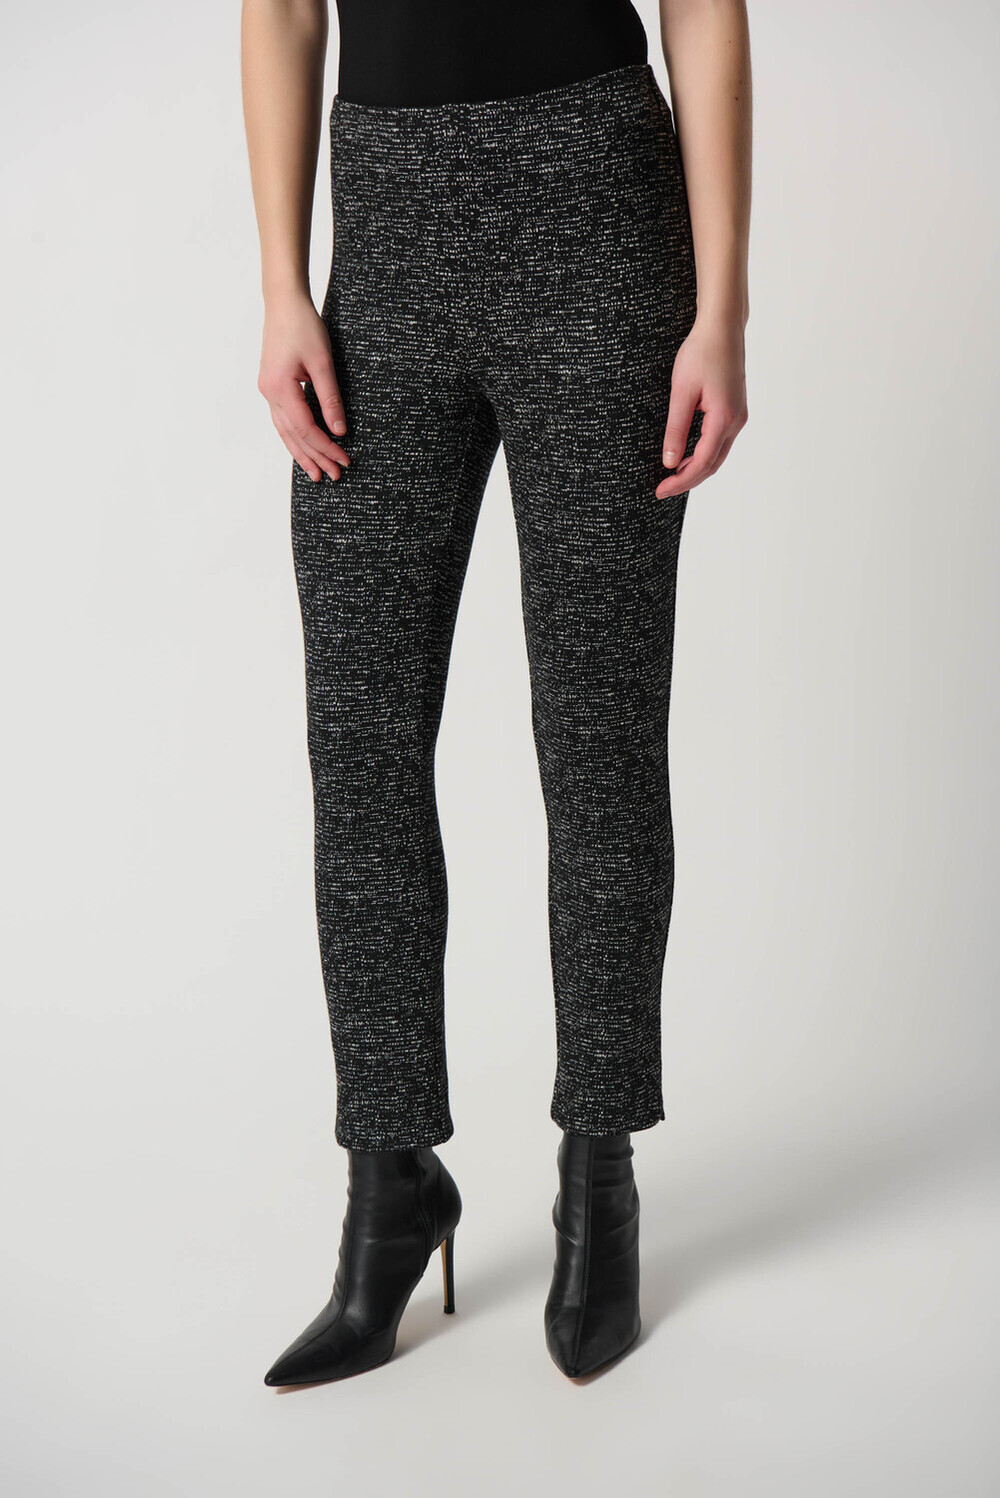 Tweed Straight Leg Pants Style 234116. Black/off White